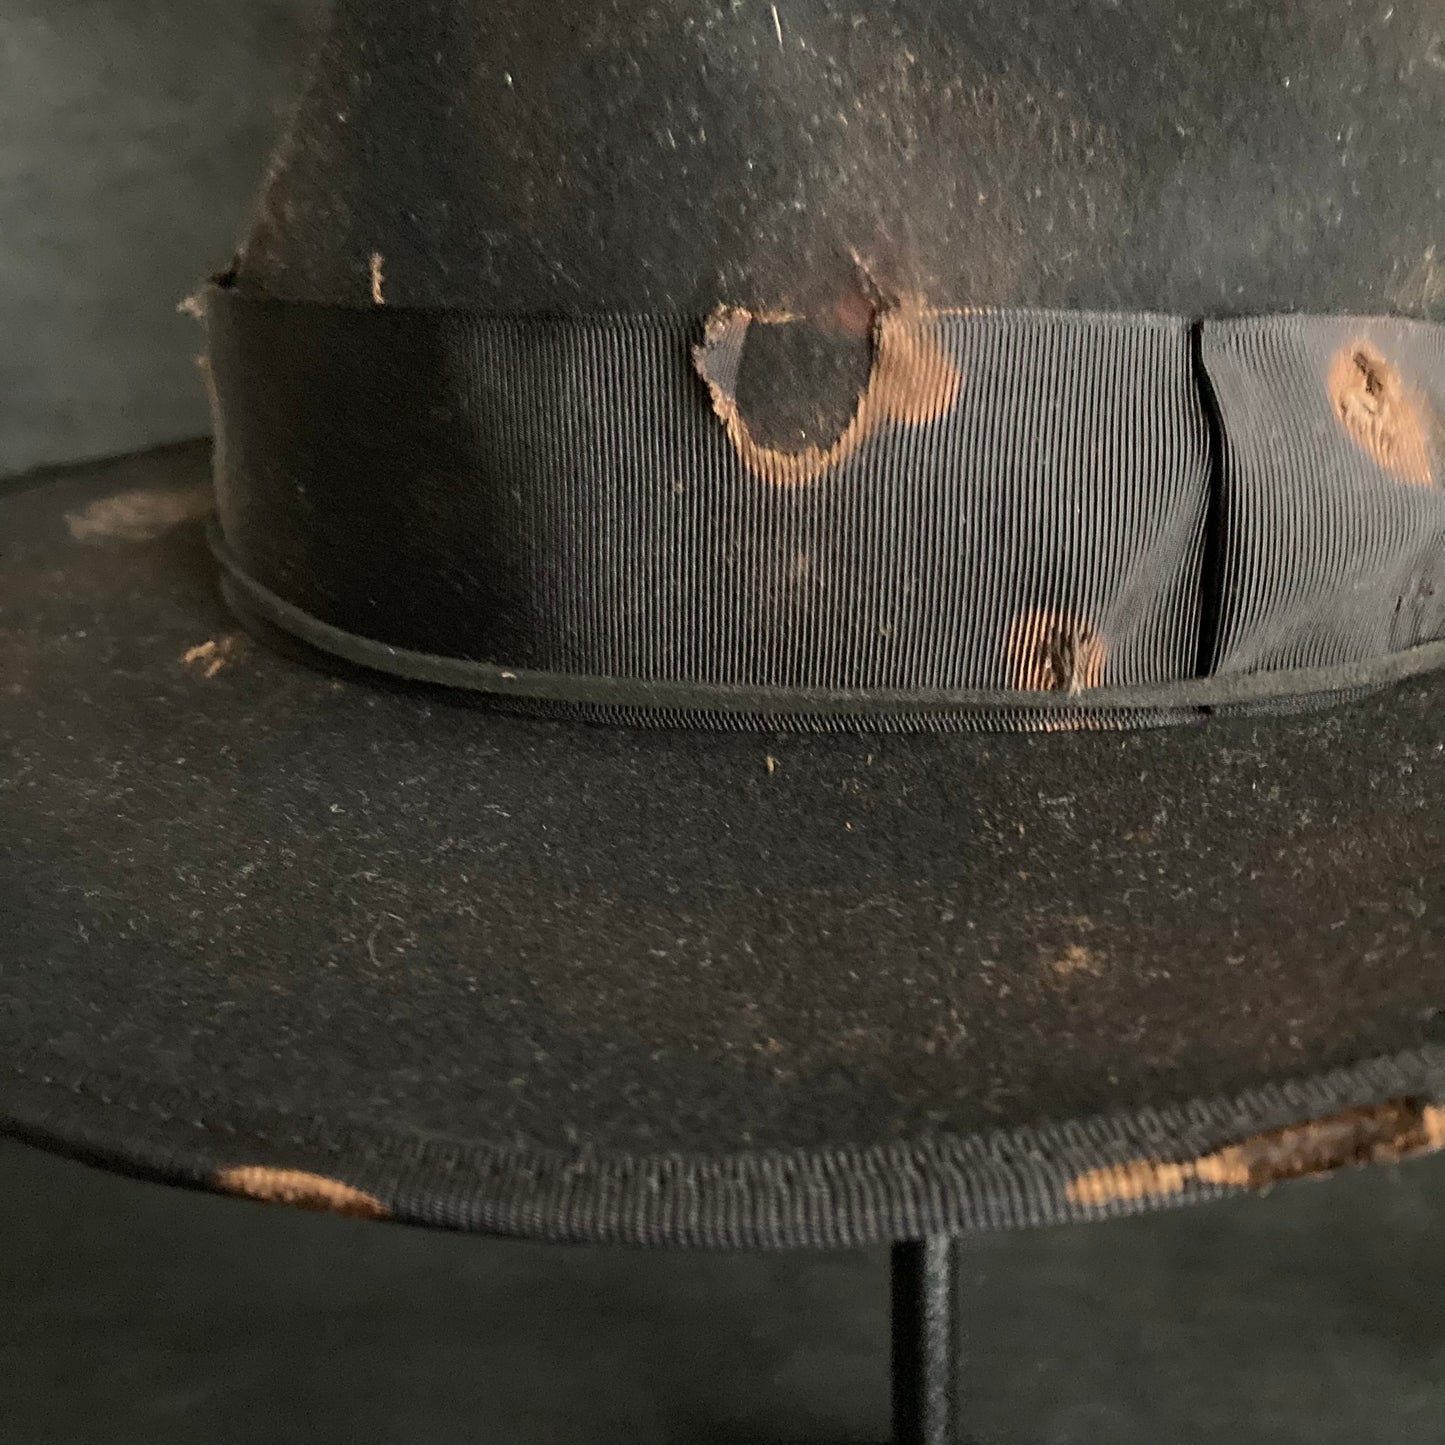 Scorched black fedora hat